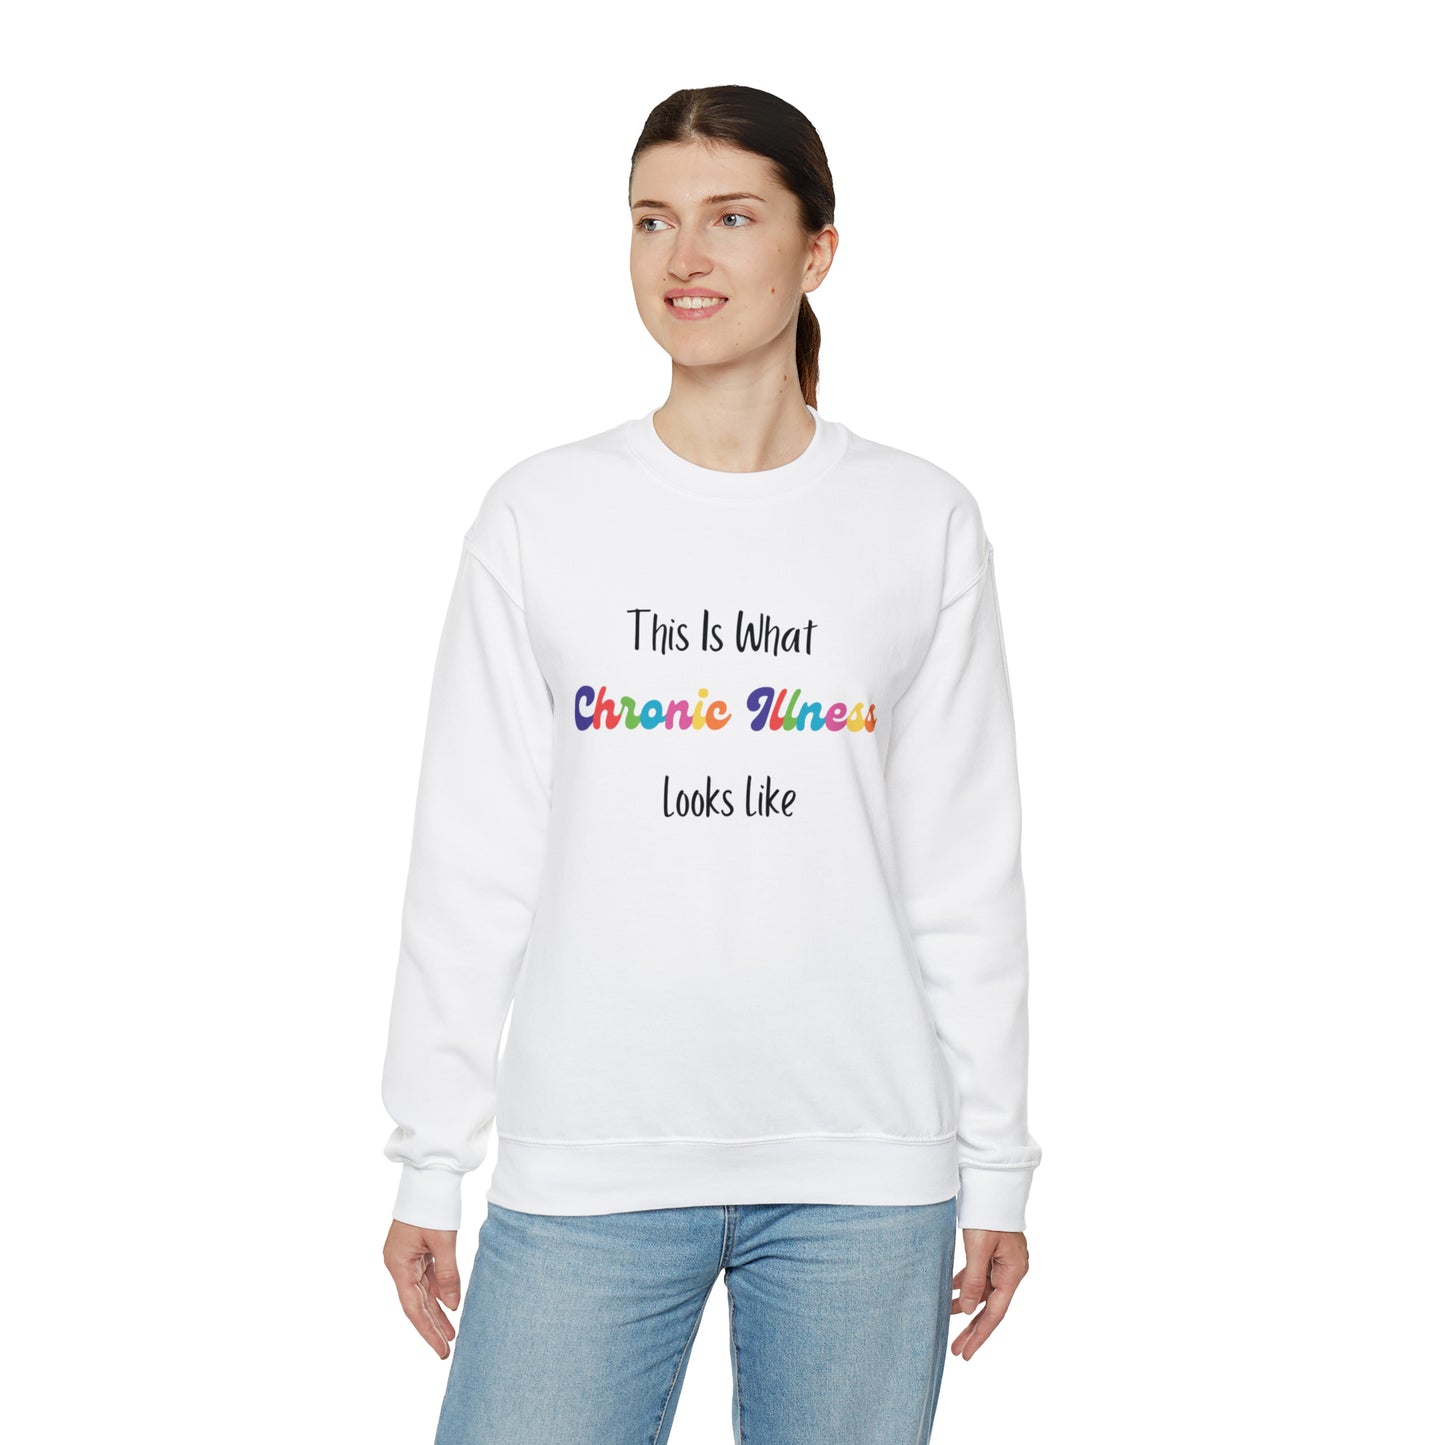 This Is What Chronic Illness Looks Like Sweatshirt